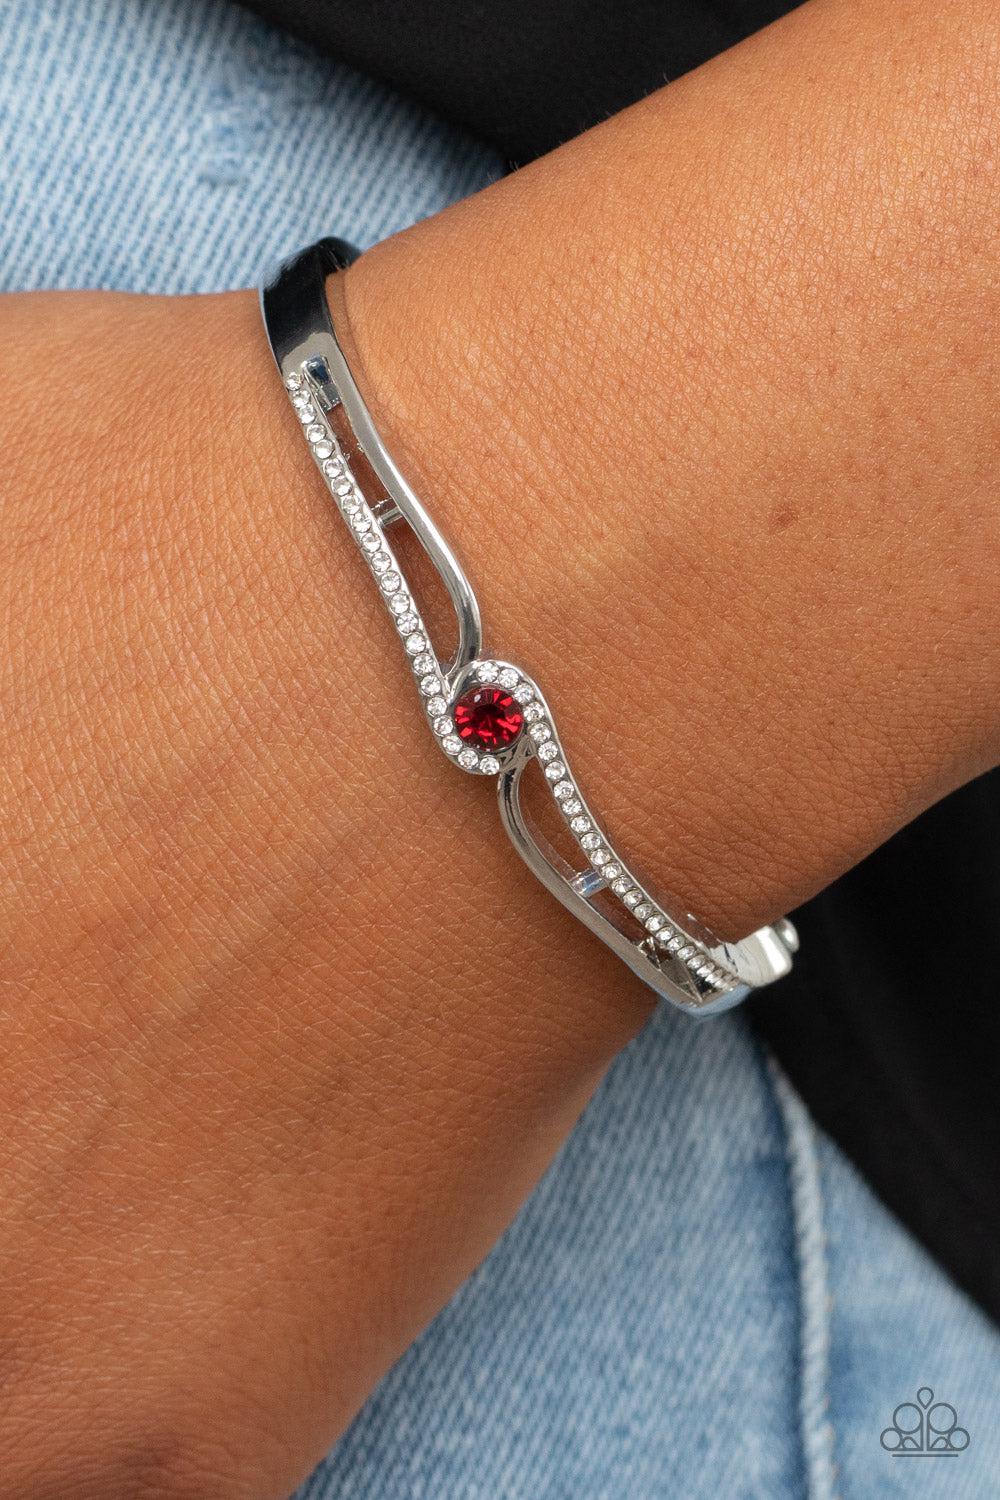 Top-Shelf Shimmer Red Rhinestone Bracelet - Paparazzi Accessories- lightbox - CarasShop.com - $5 Jewelry by Cara Jewels